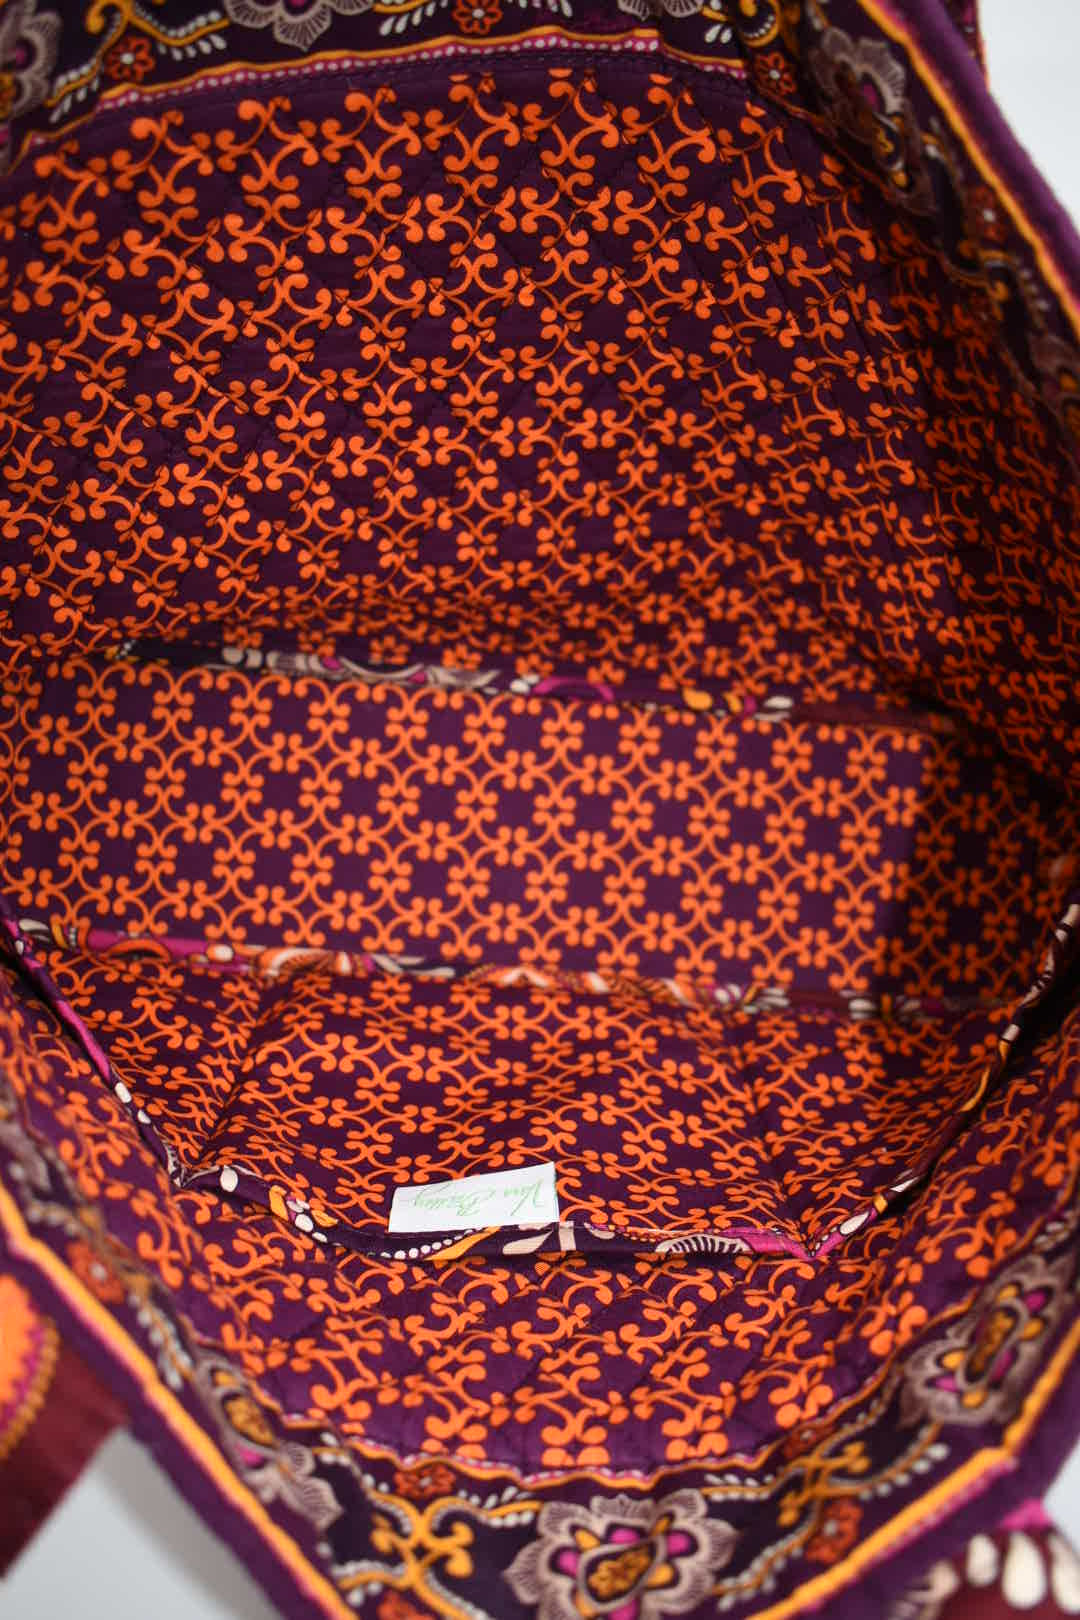 Vera Bradley East West Tote Bag in "Safari Sunset" Pattern